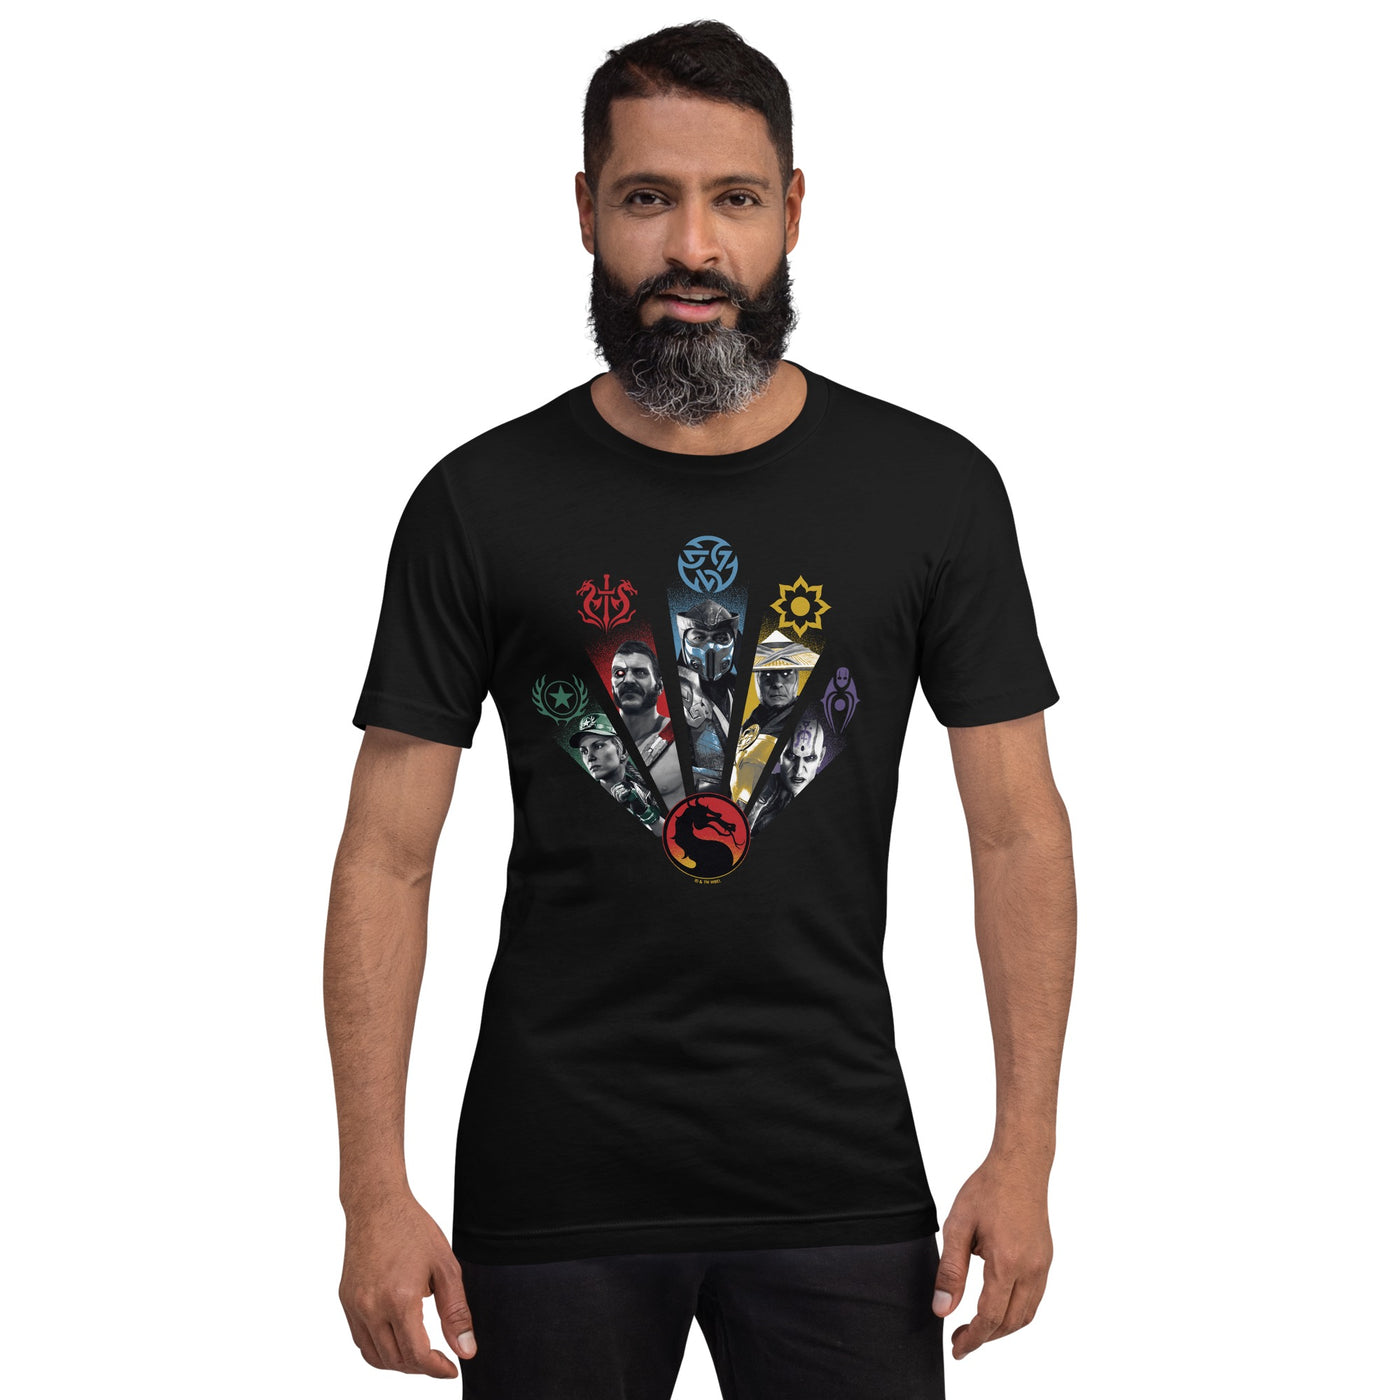 Mortal Kombat Character Emblems T-Shirt